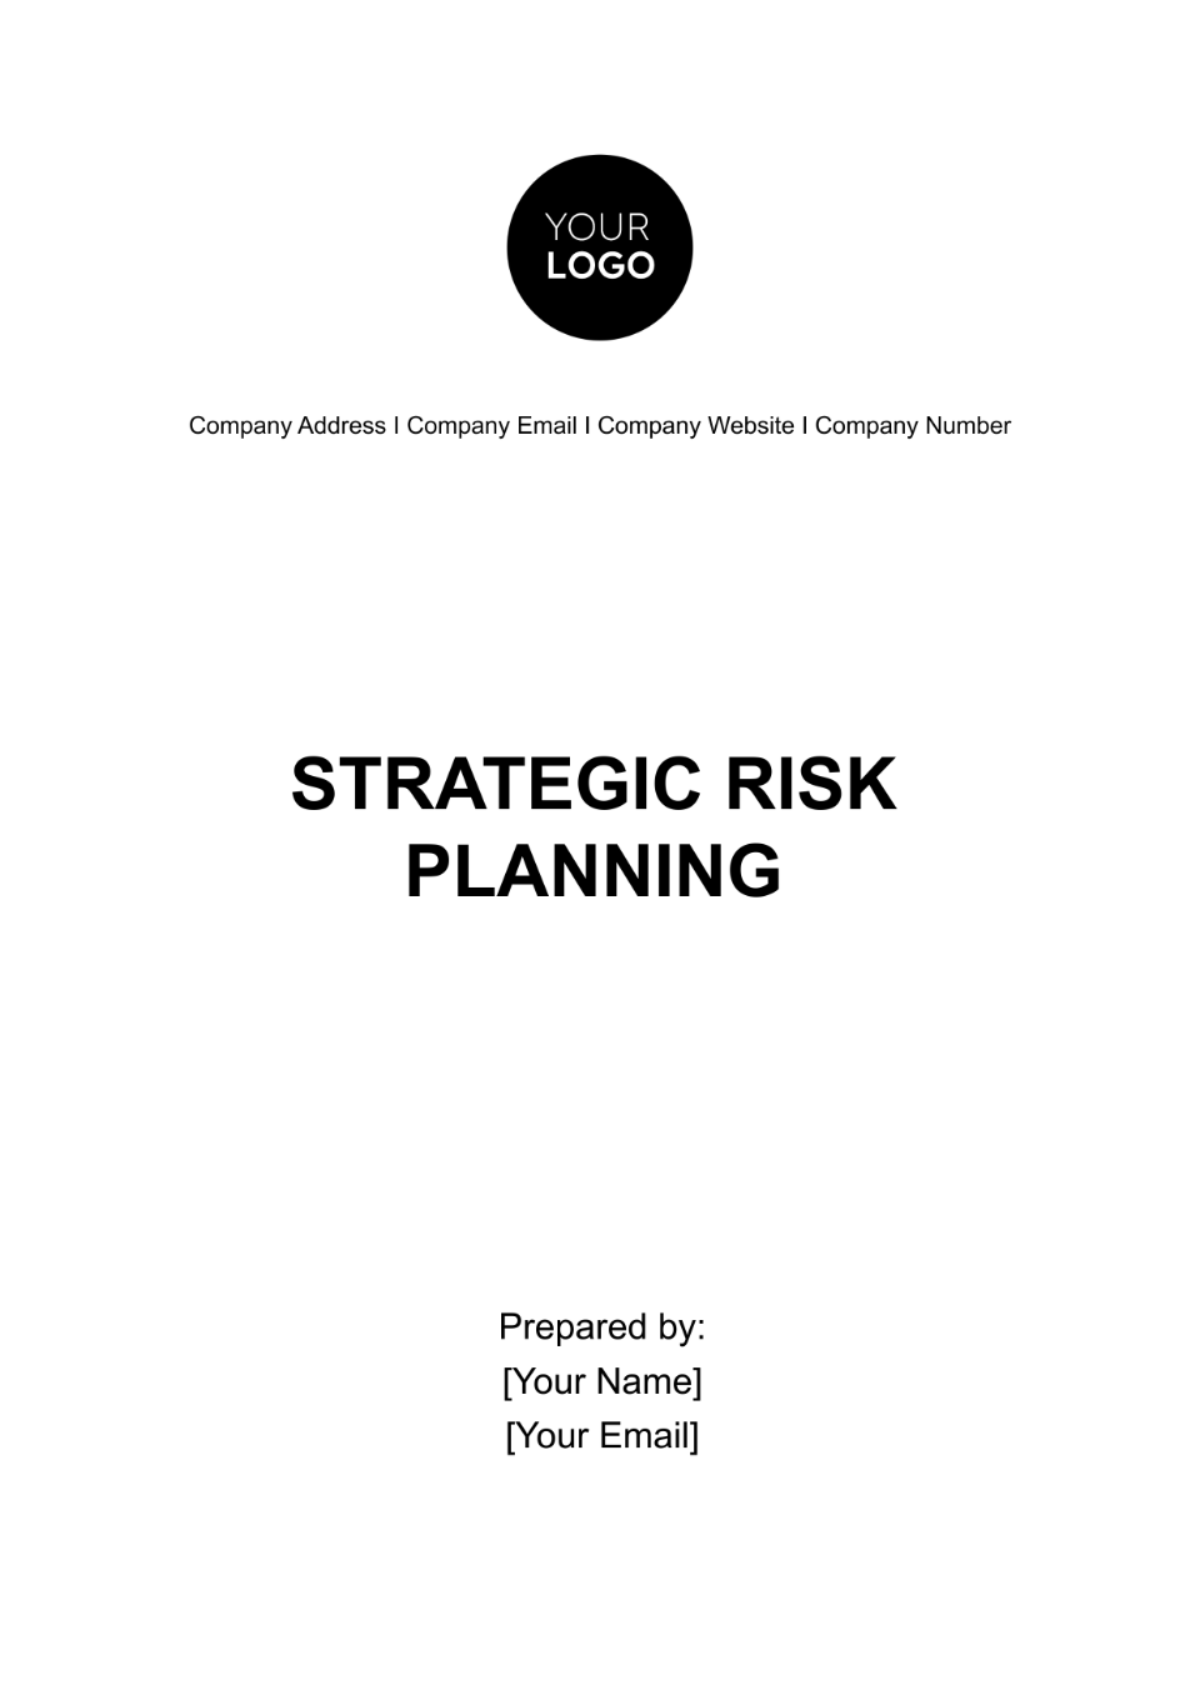 Strategic Risk Planning Template